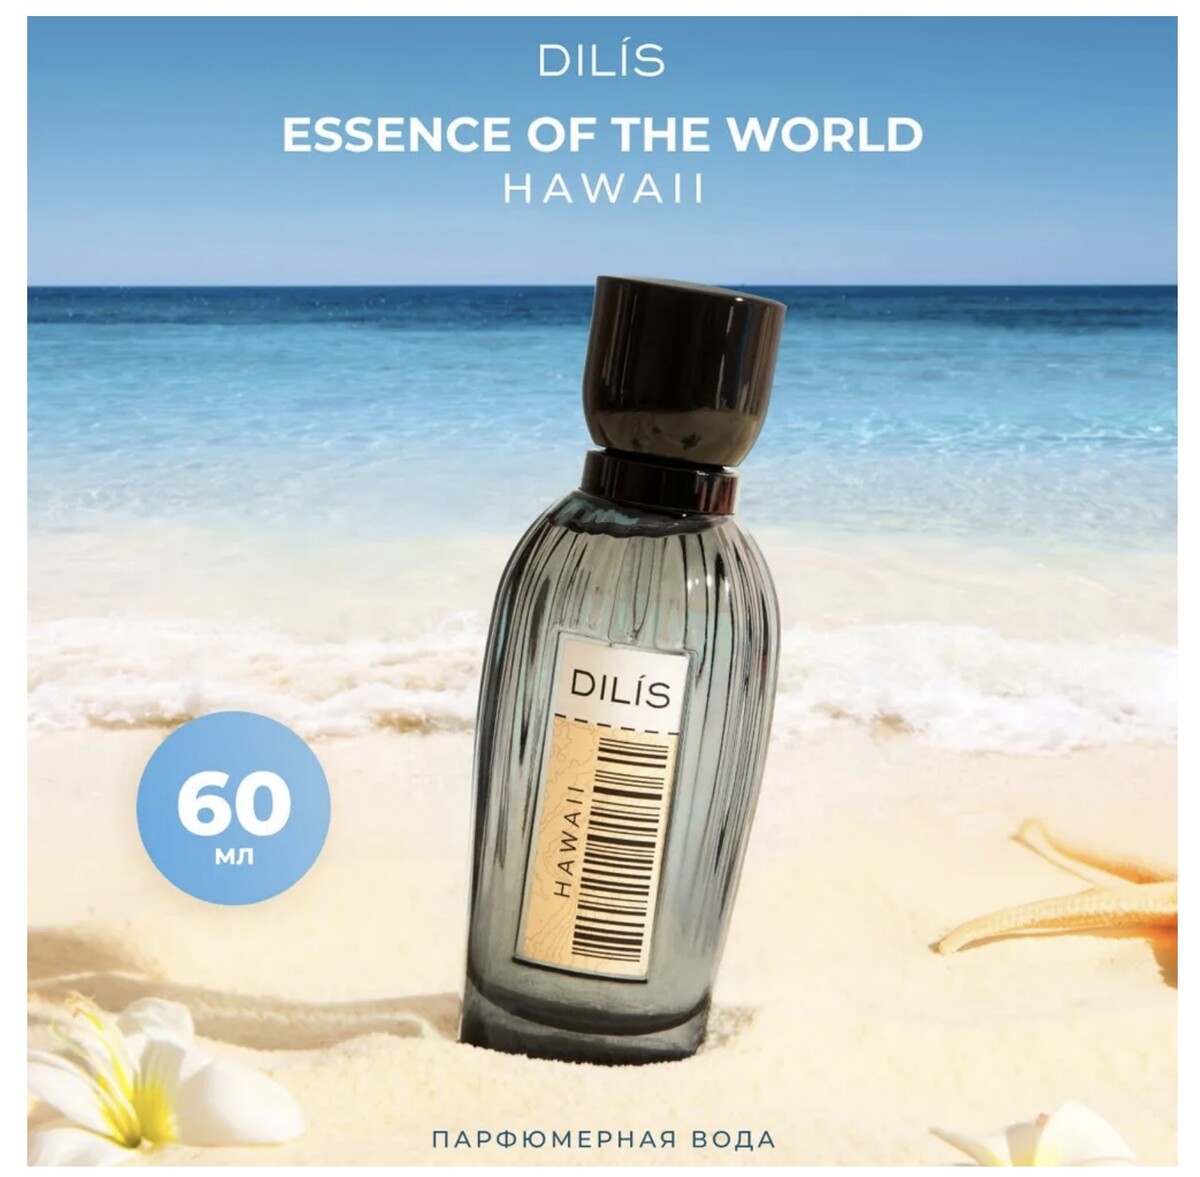 Essence of the world парфюмерная вода для женщин 60 мл fénomène muse духи группы для женщин 75мл